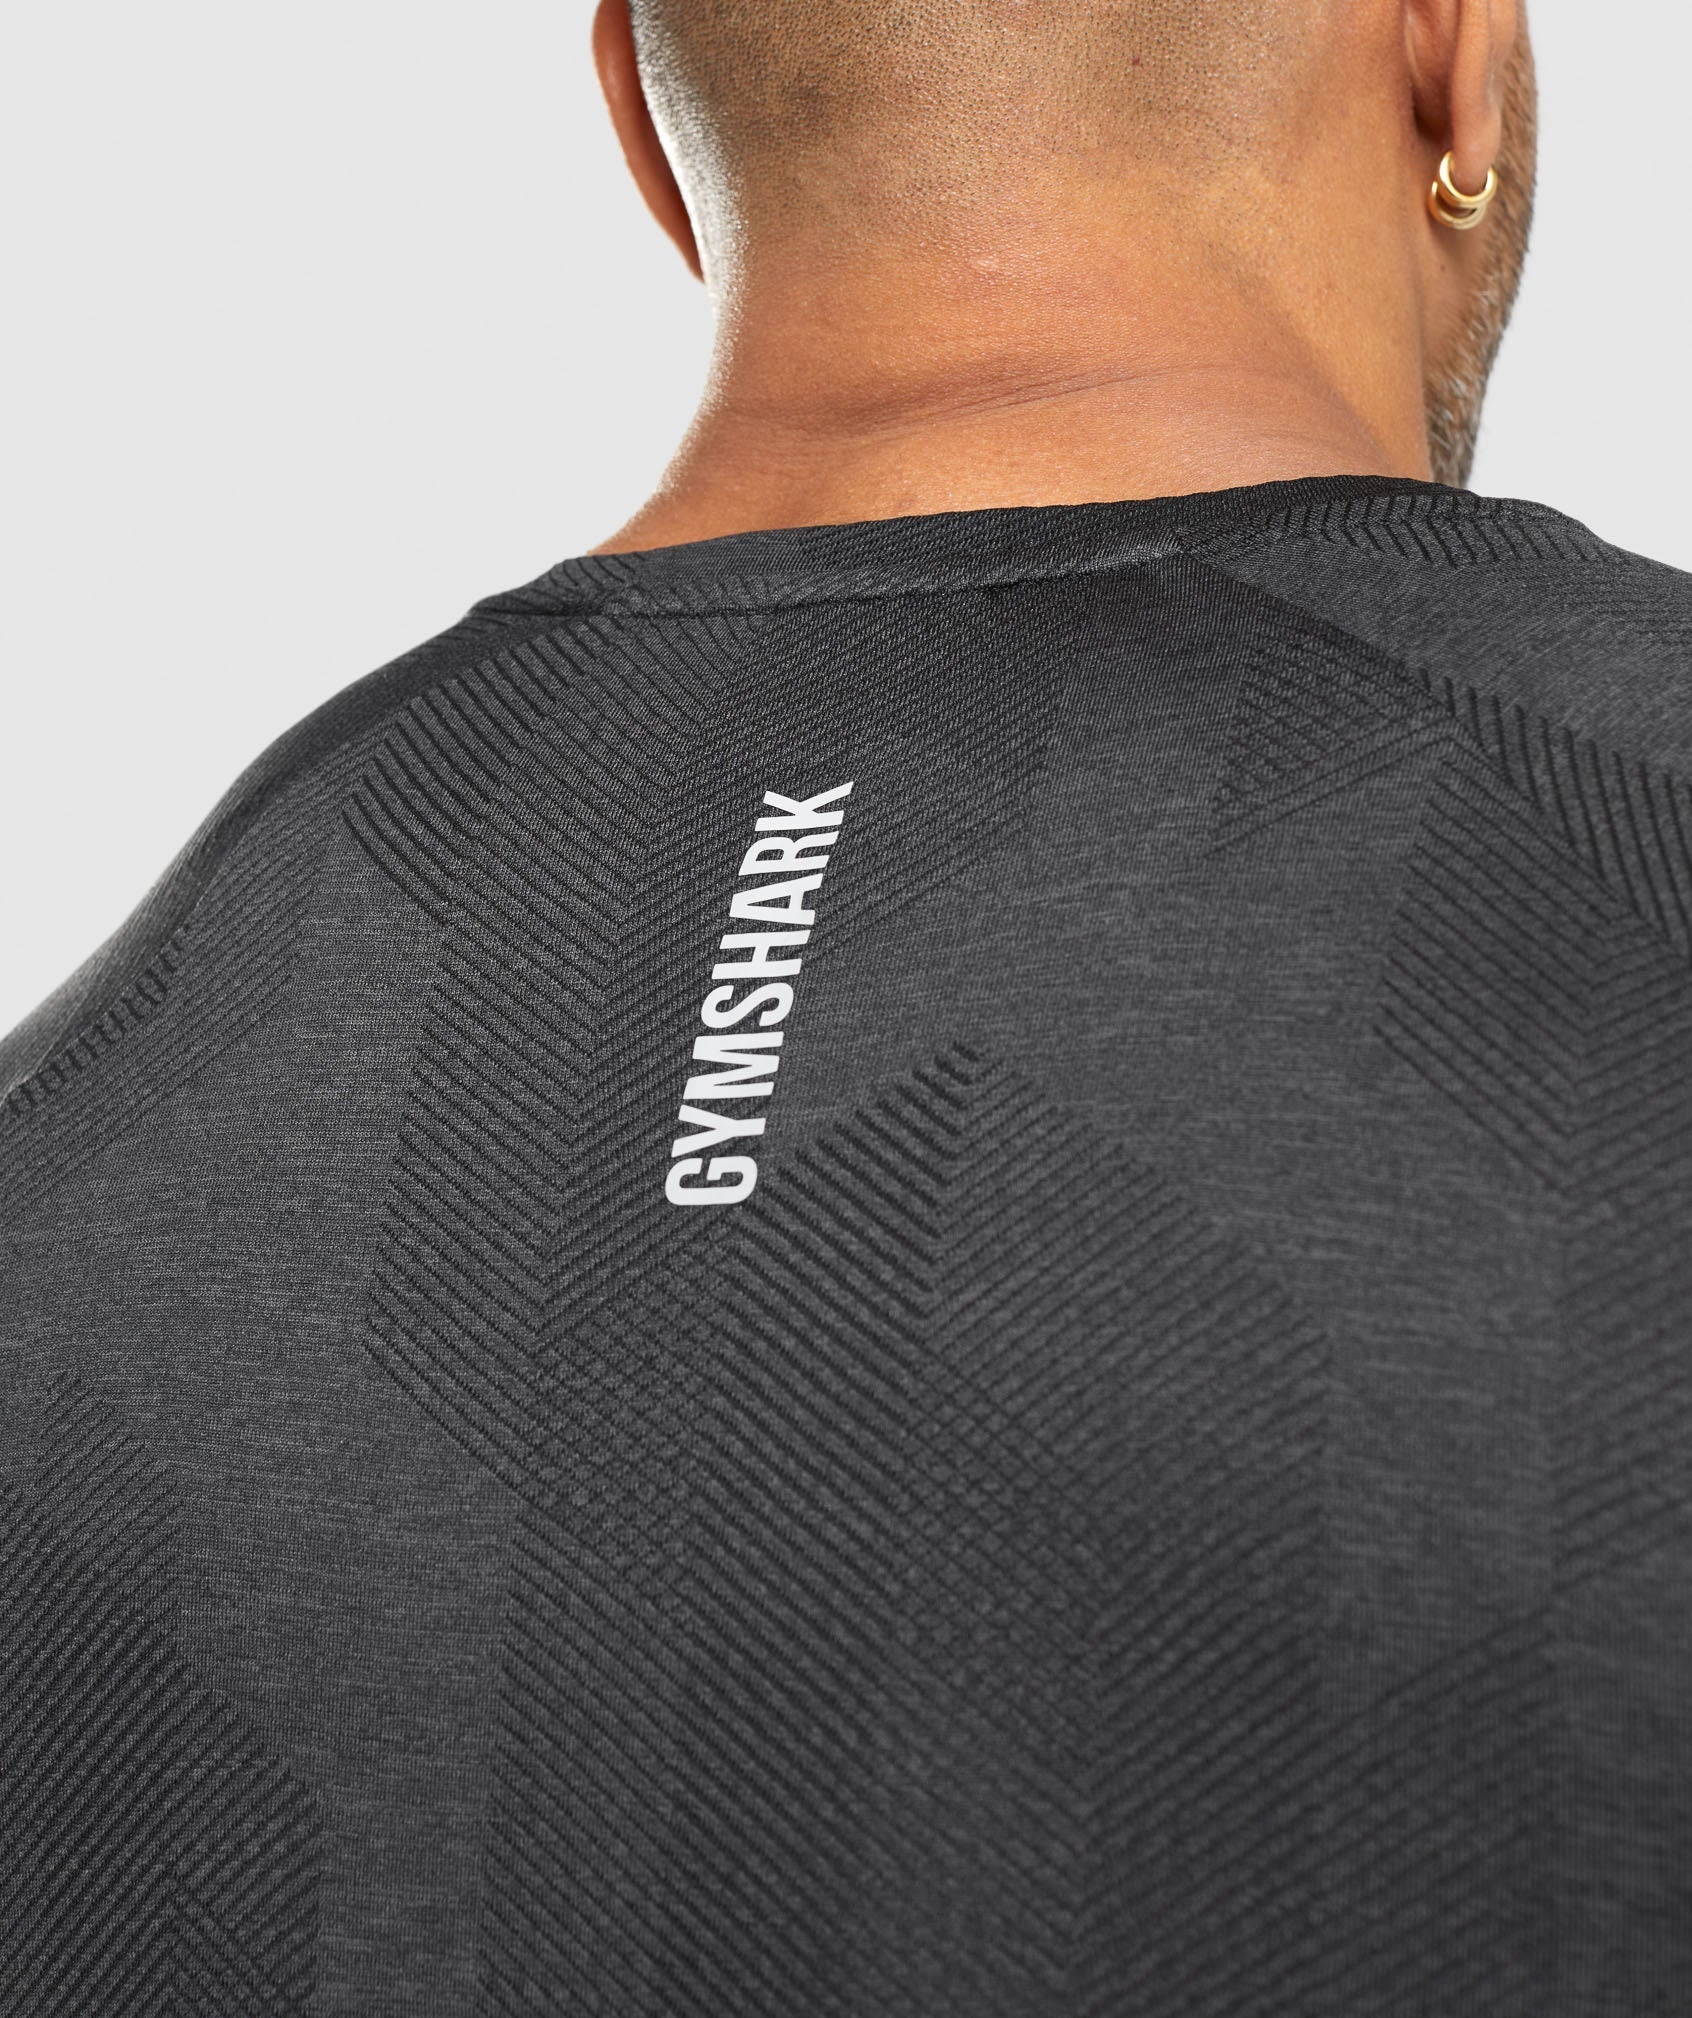 Gymshark Apex T-Shirt - Black/Onyx Grey